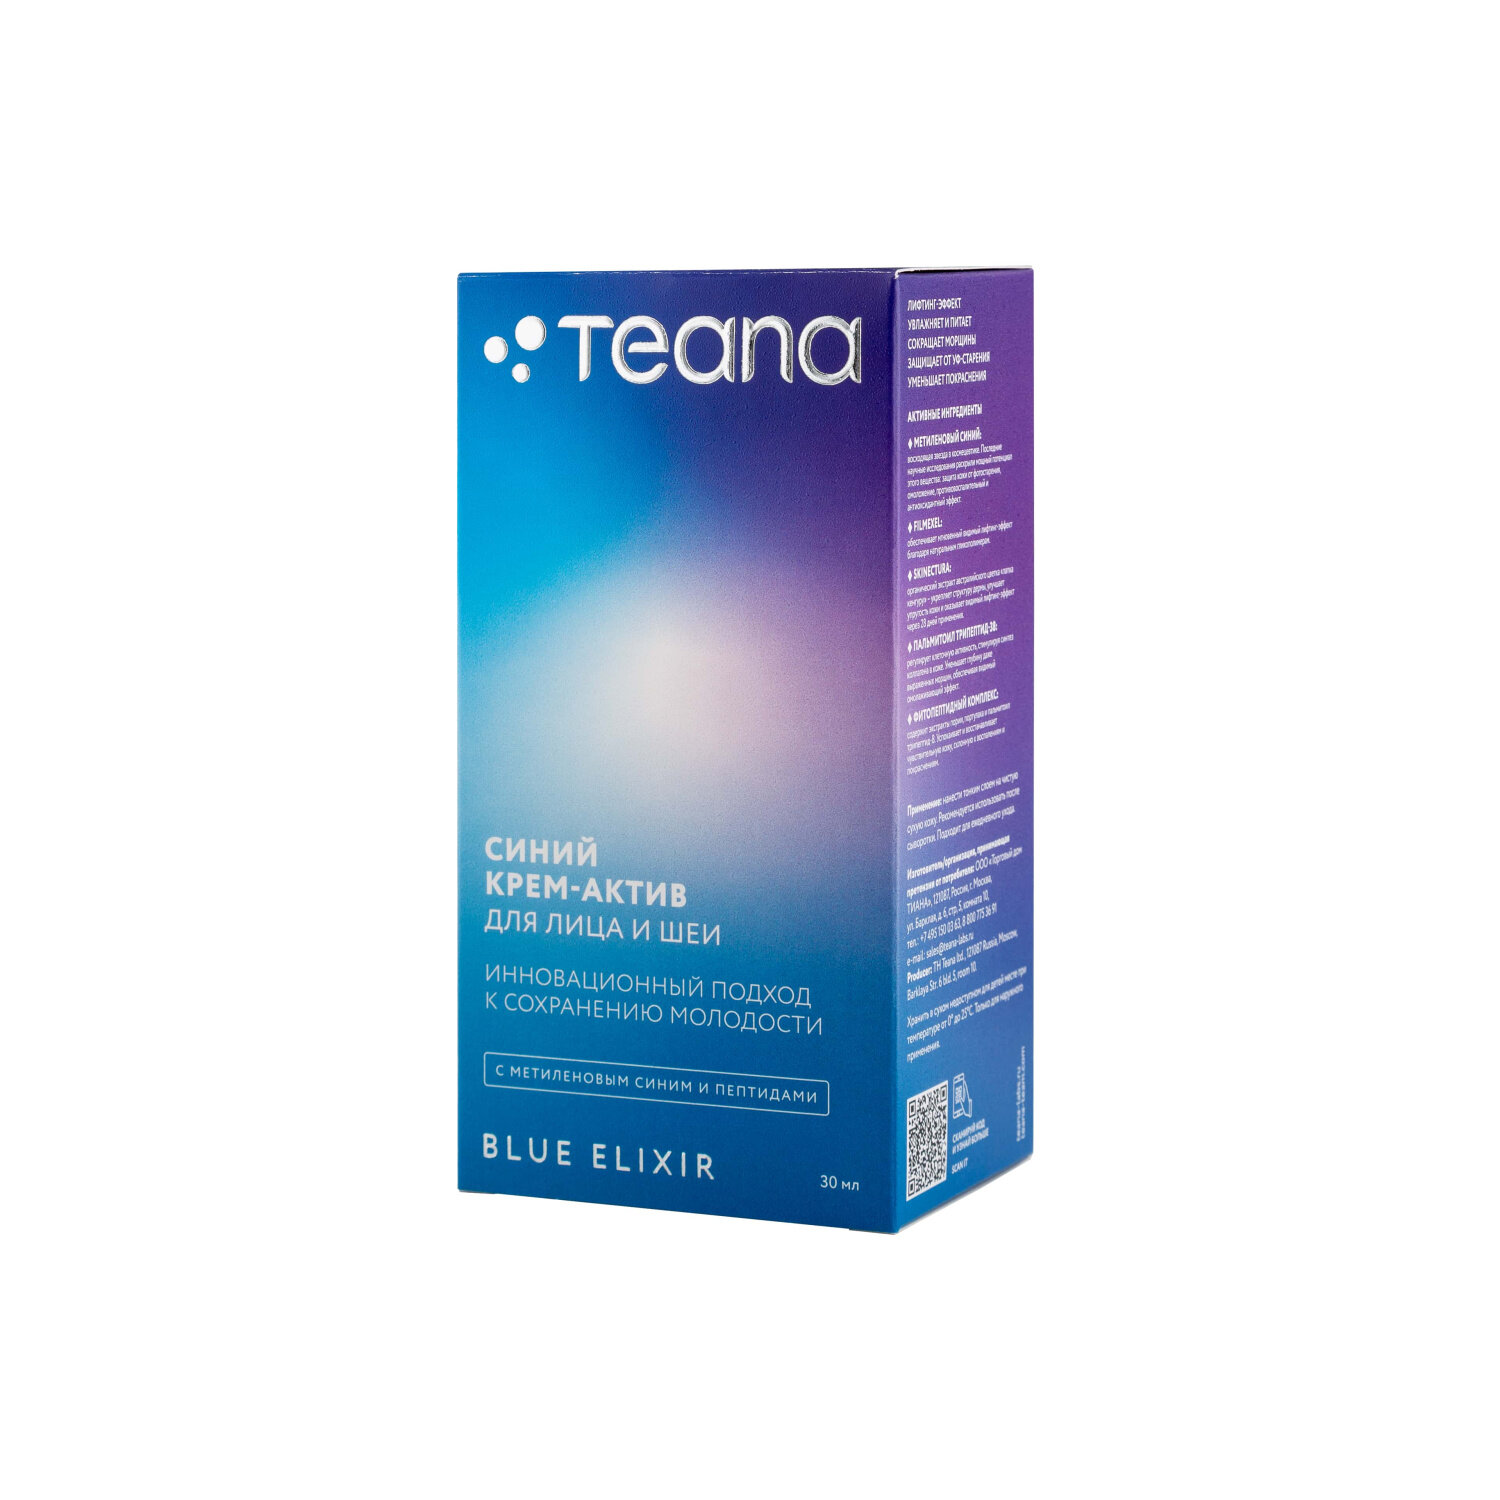 Синий крем-актив для лица и шеи с метиленовым синим и пептидами Teana (Теана), 30 мл.